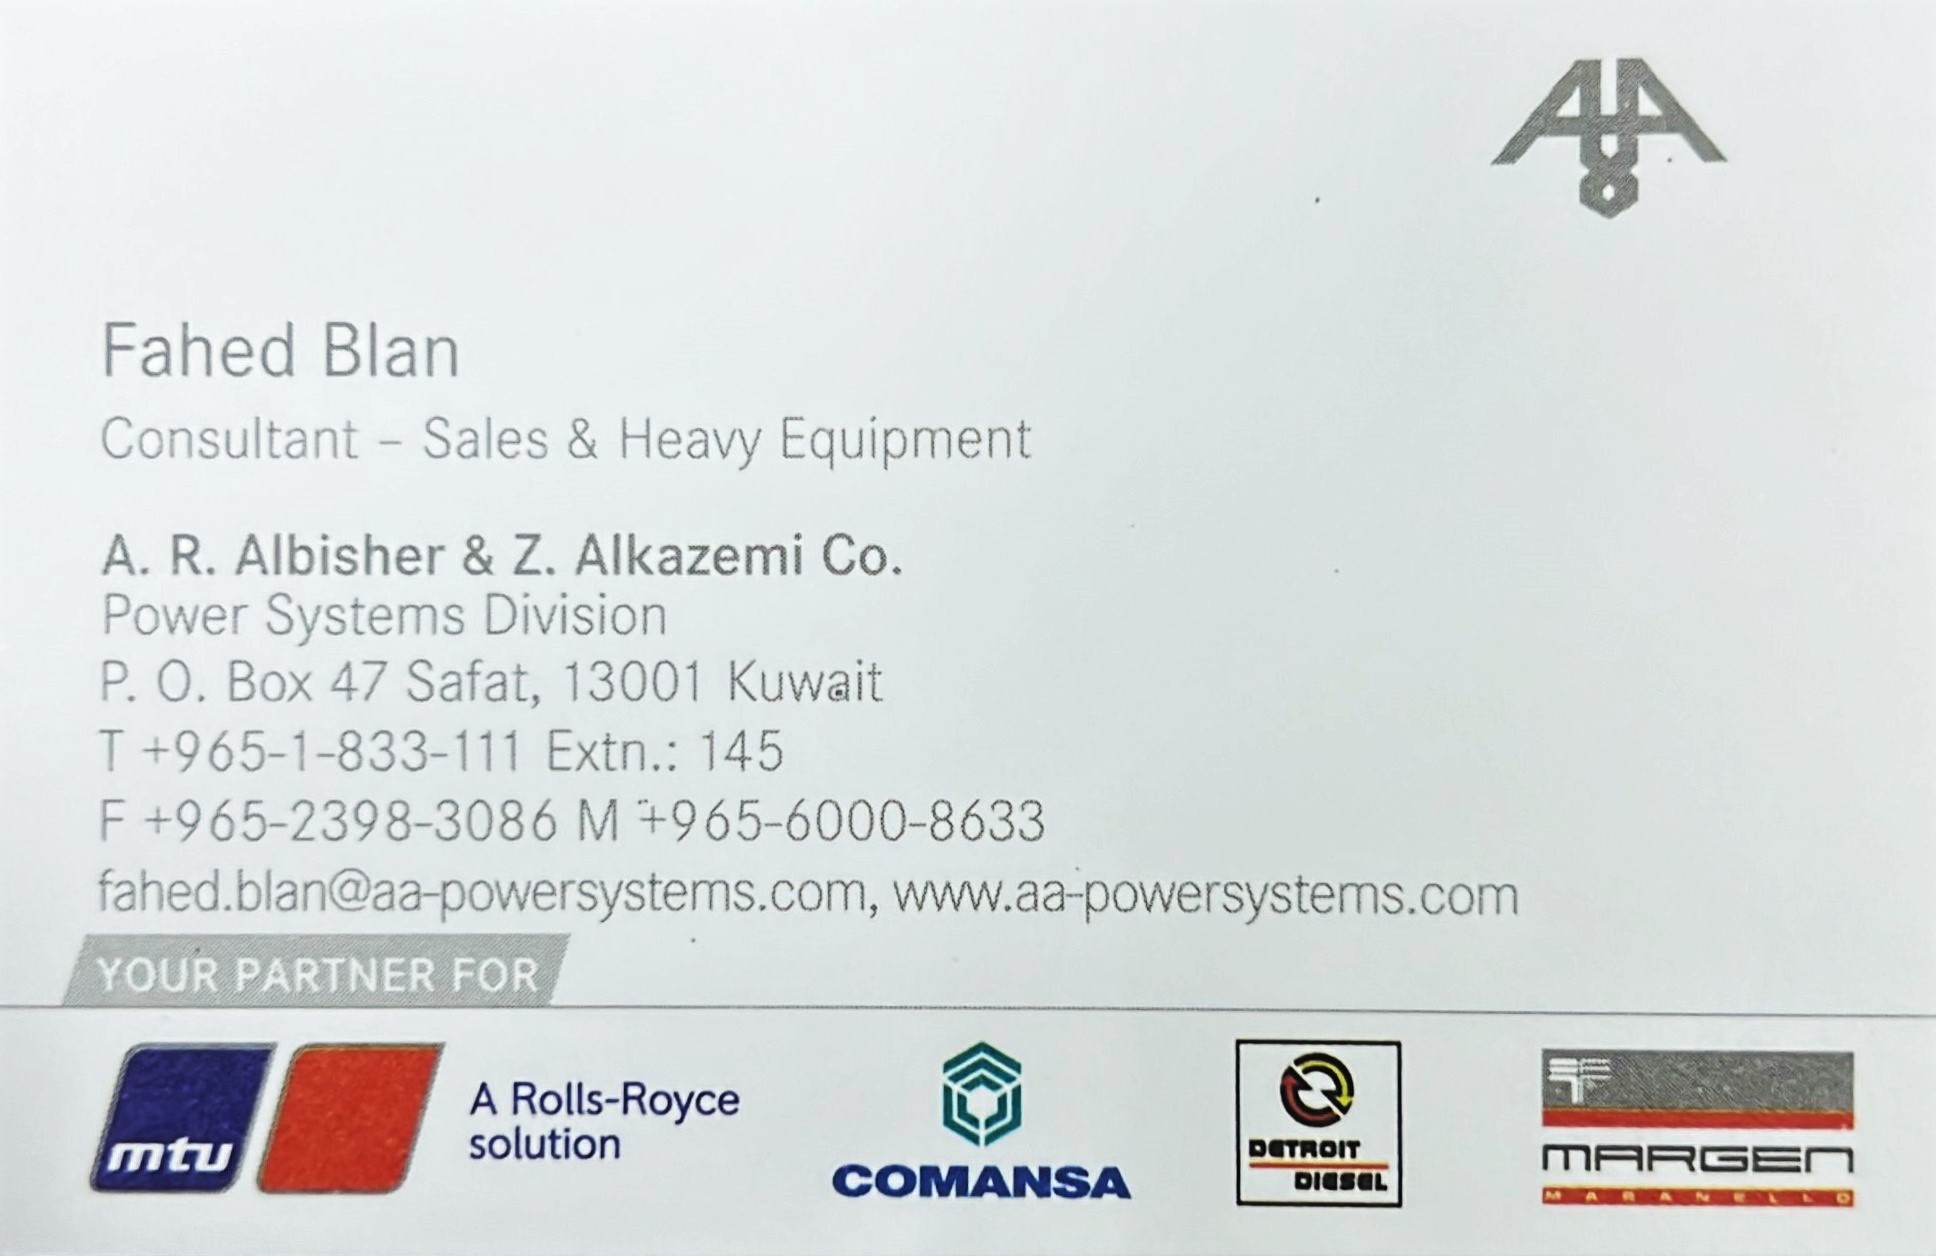 A. R. Albisher & Z. Alkazemi Co. ('AA Group')